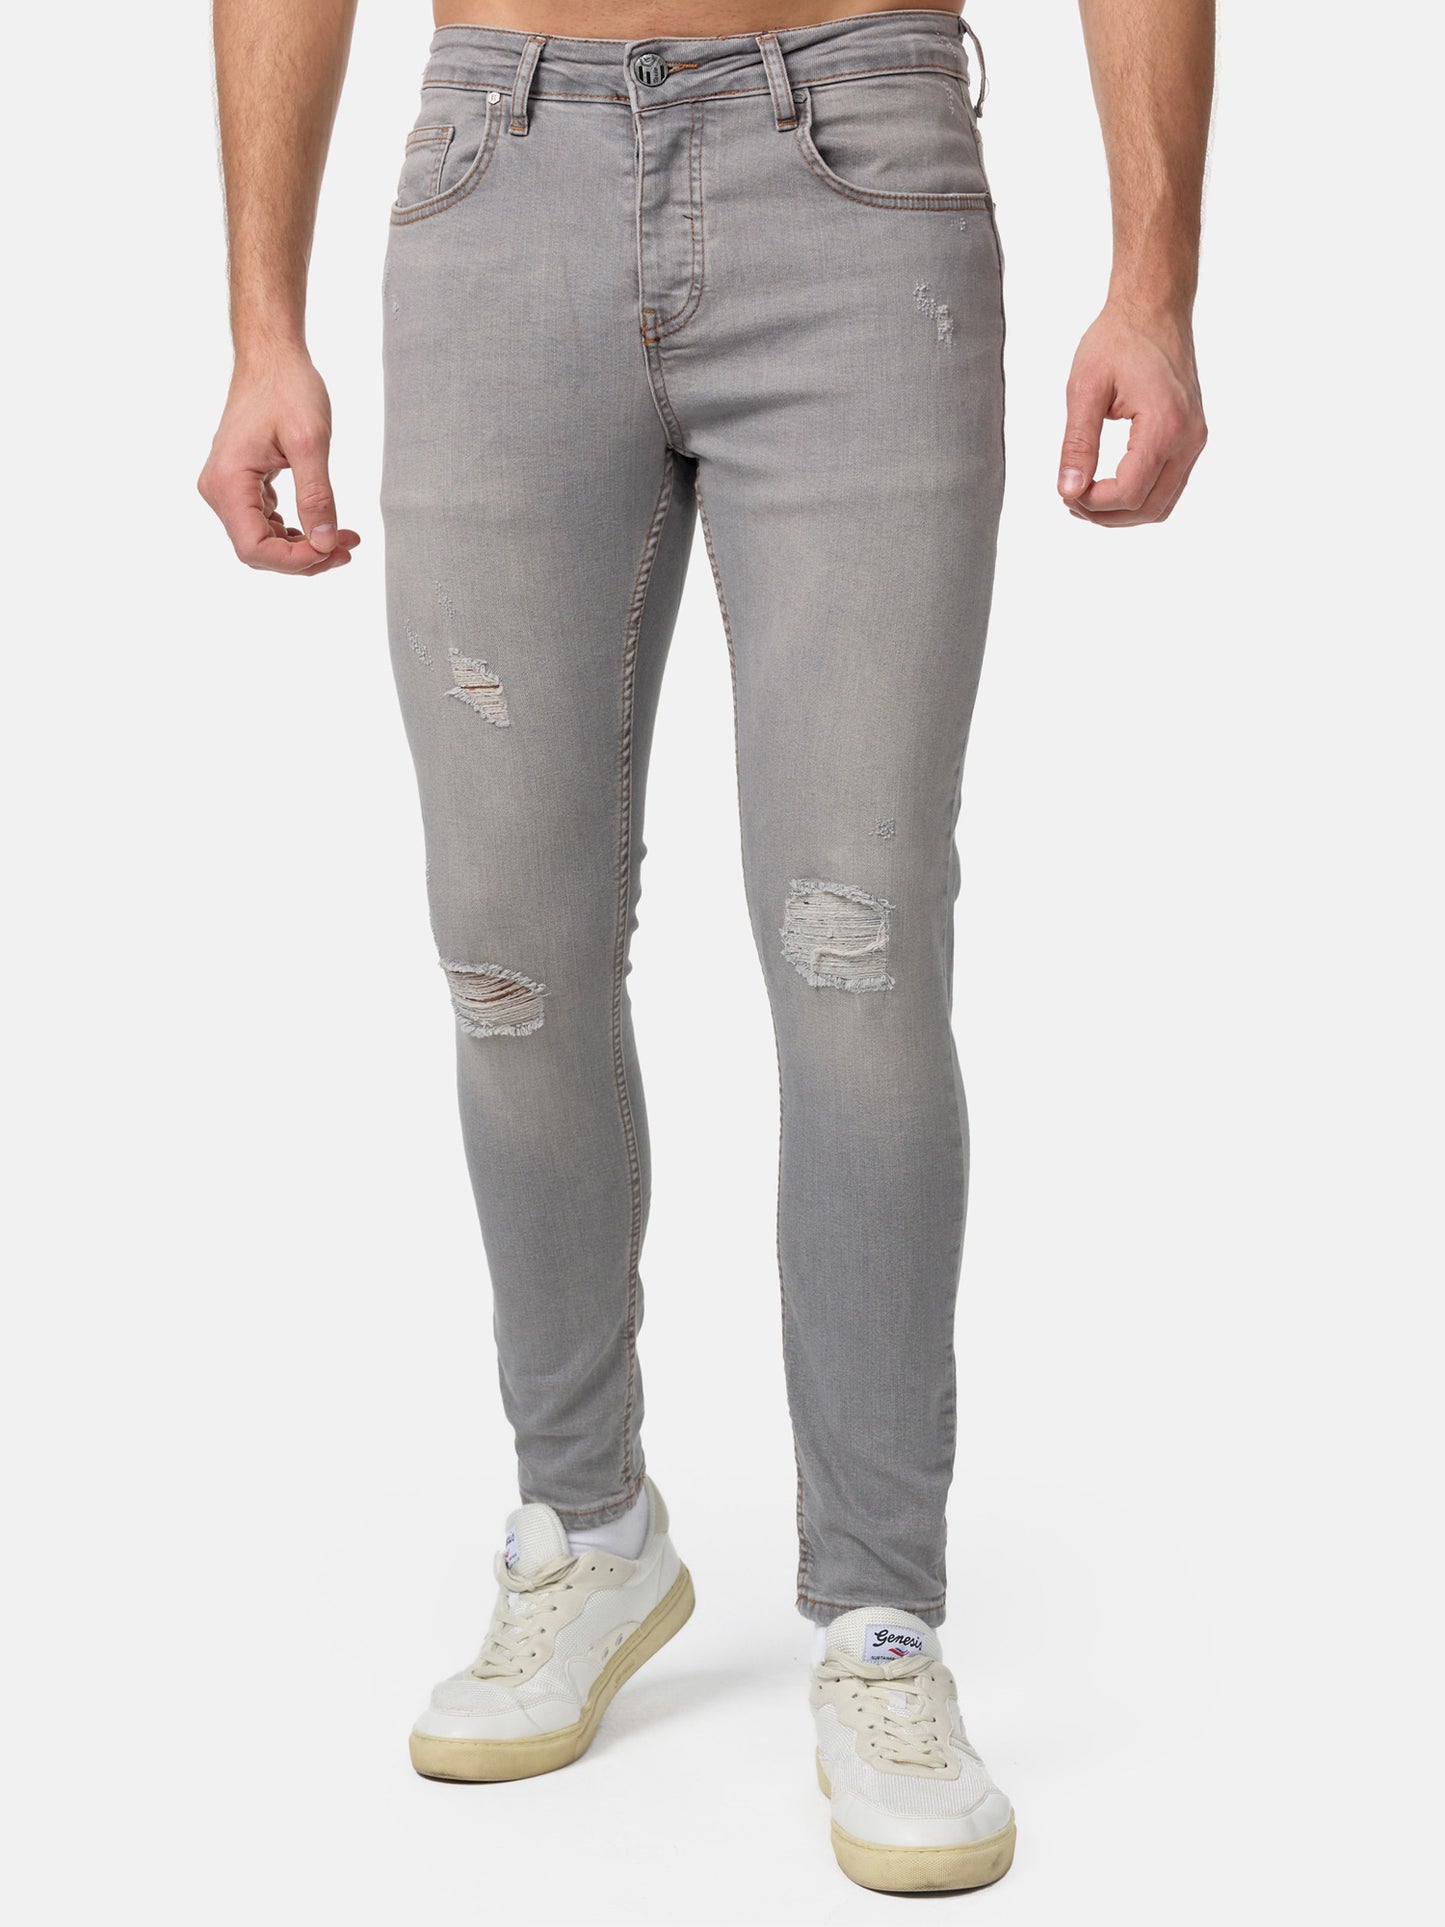 Tazzio Herren Jeans Skinny Fit 17514